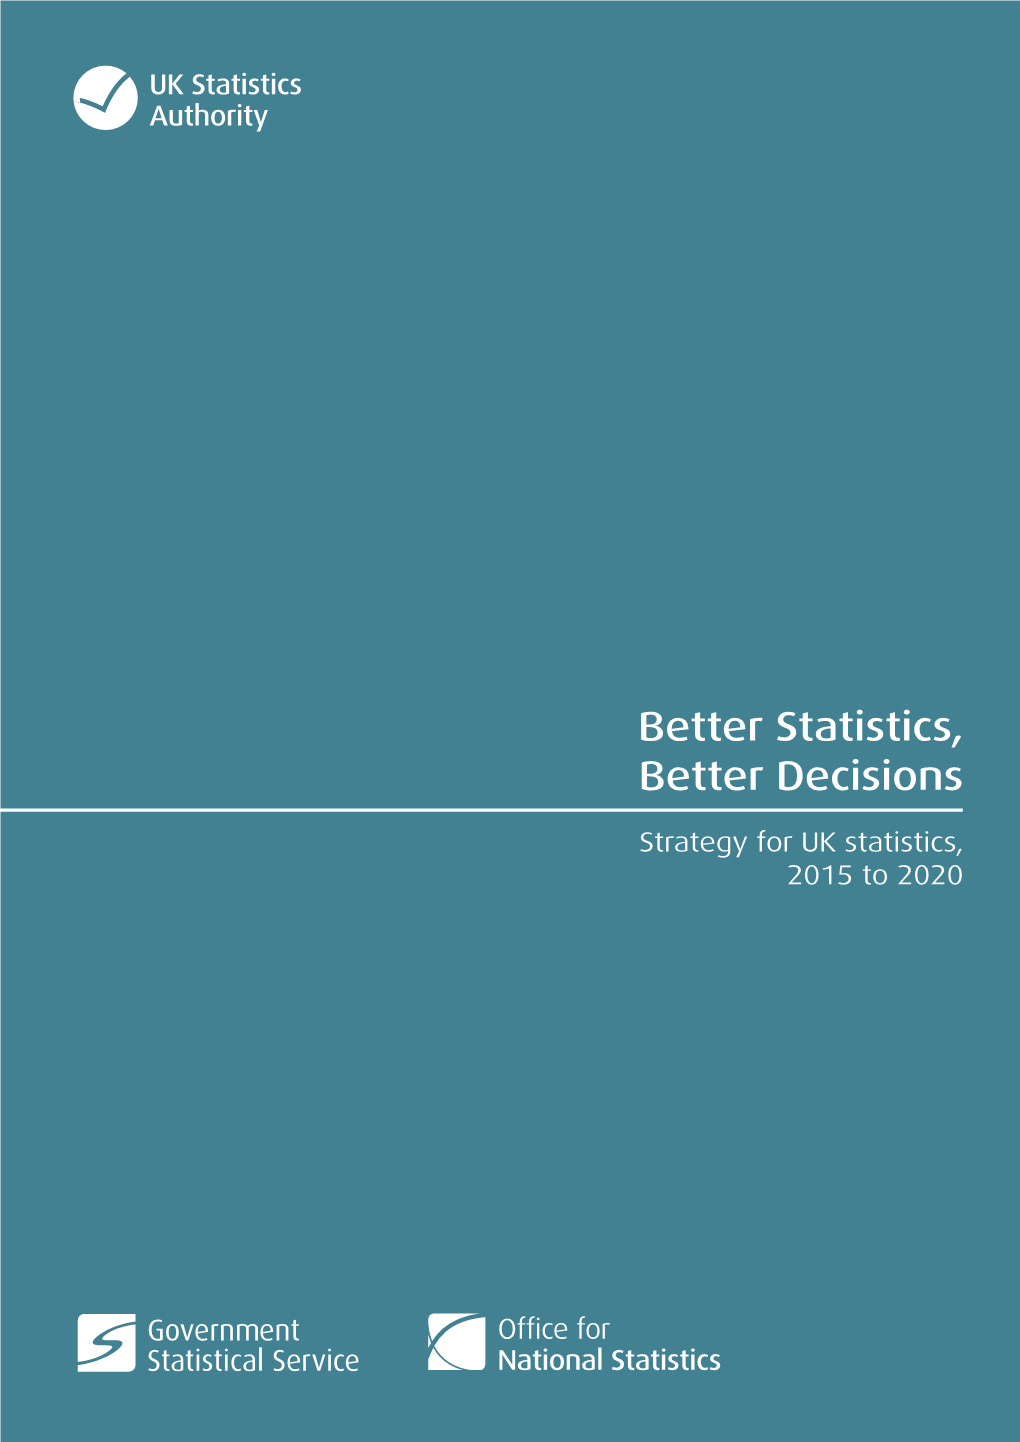 Better Statistics, Better Decisions: Strategy for UK Statistics 2015-2020